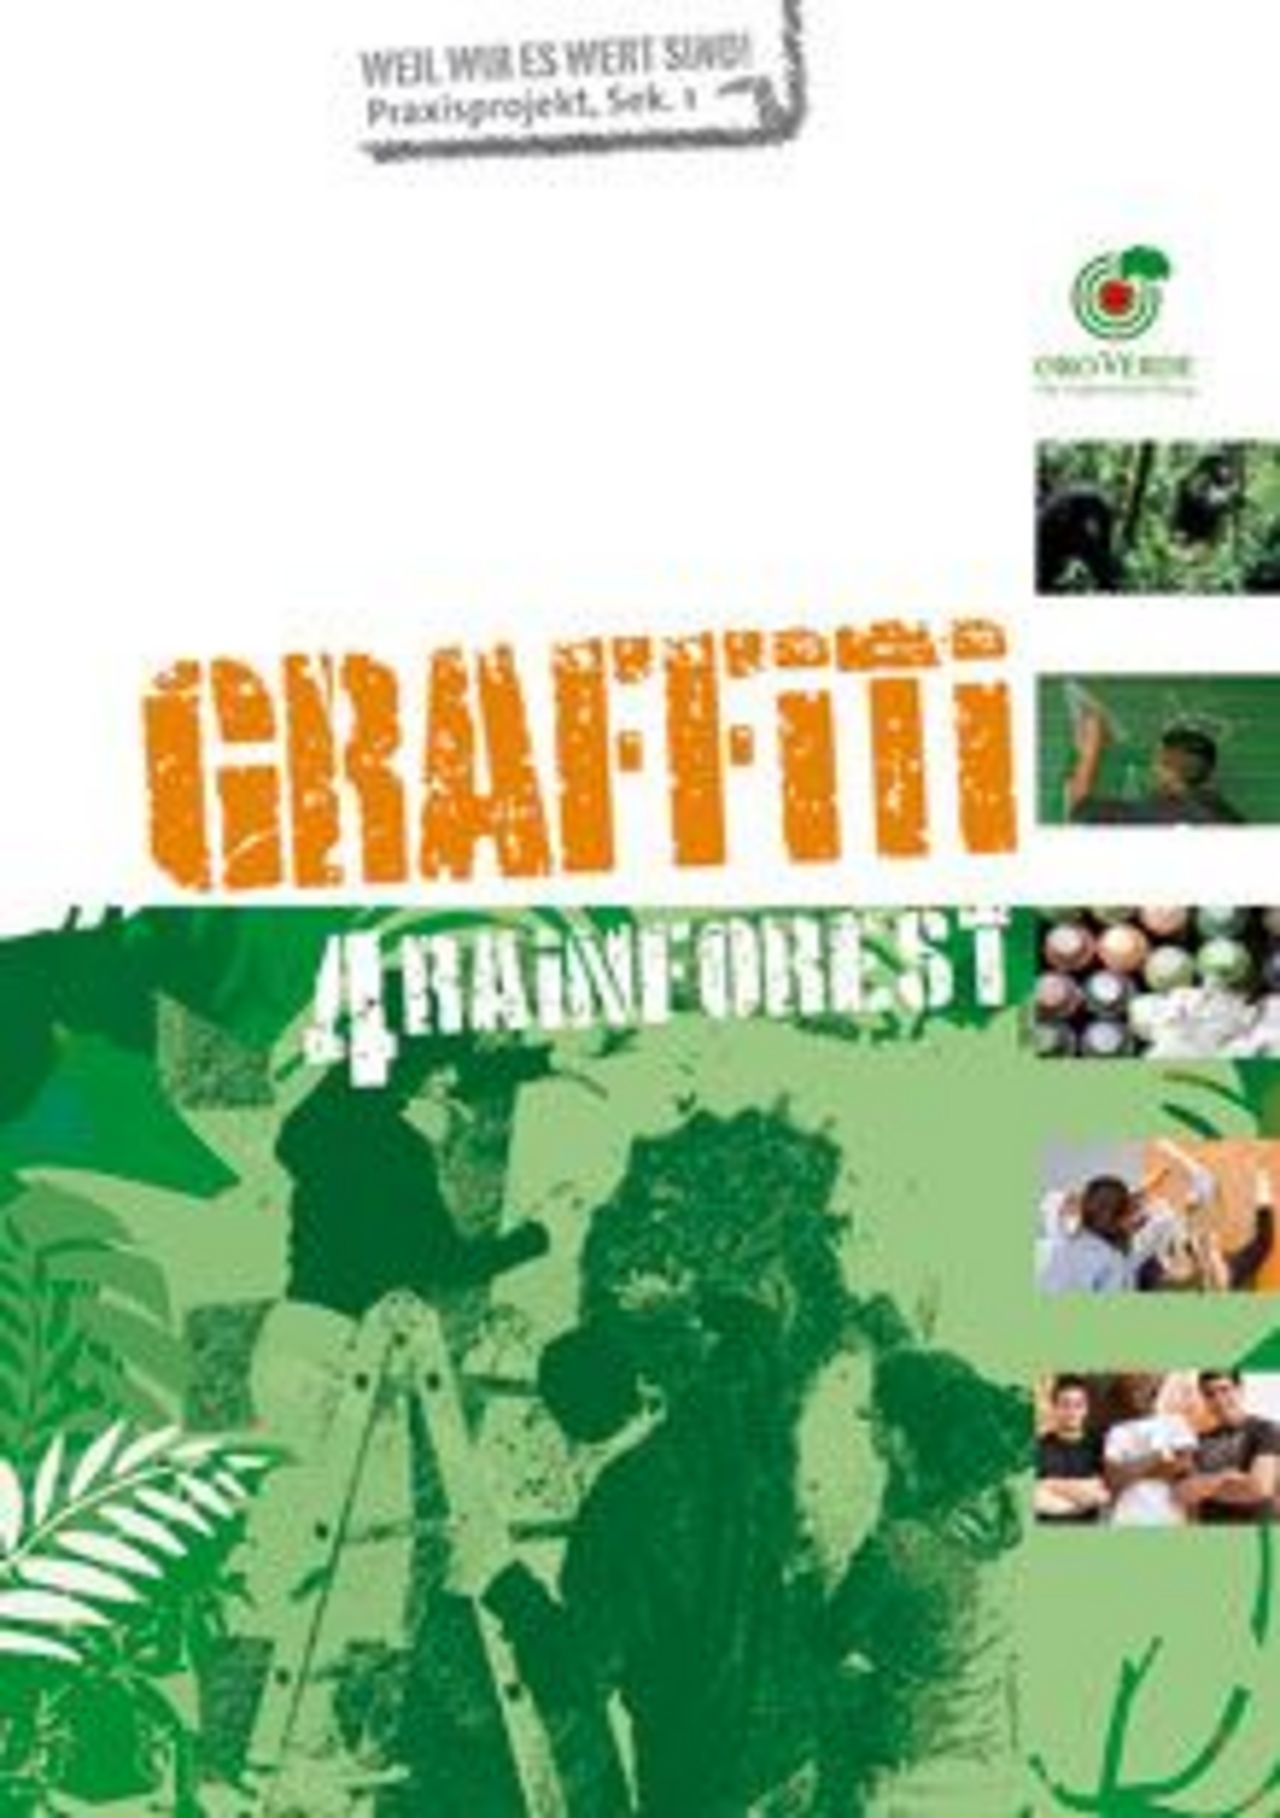 Unterrichtsmaterial "Graffiti 4 Rainforest"